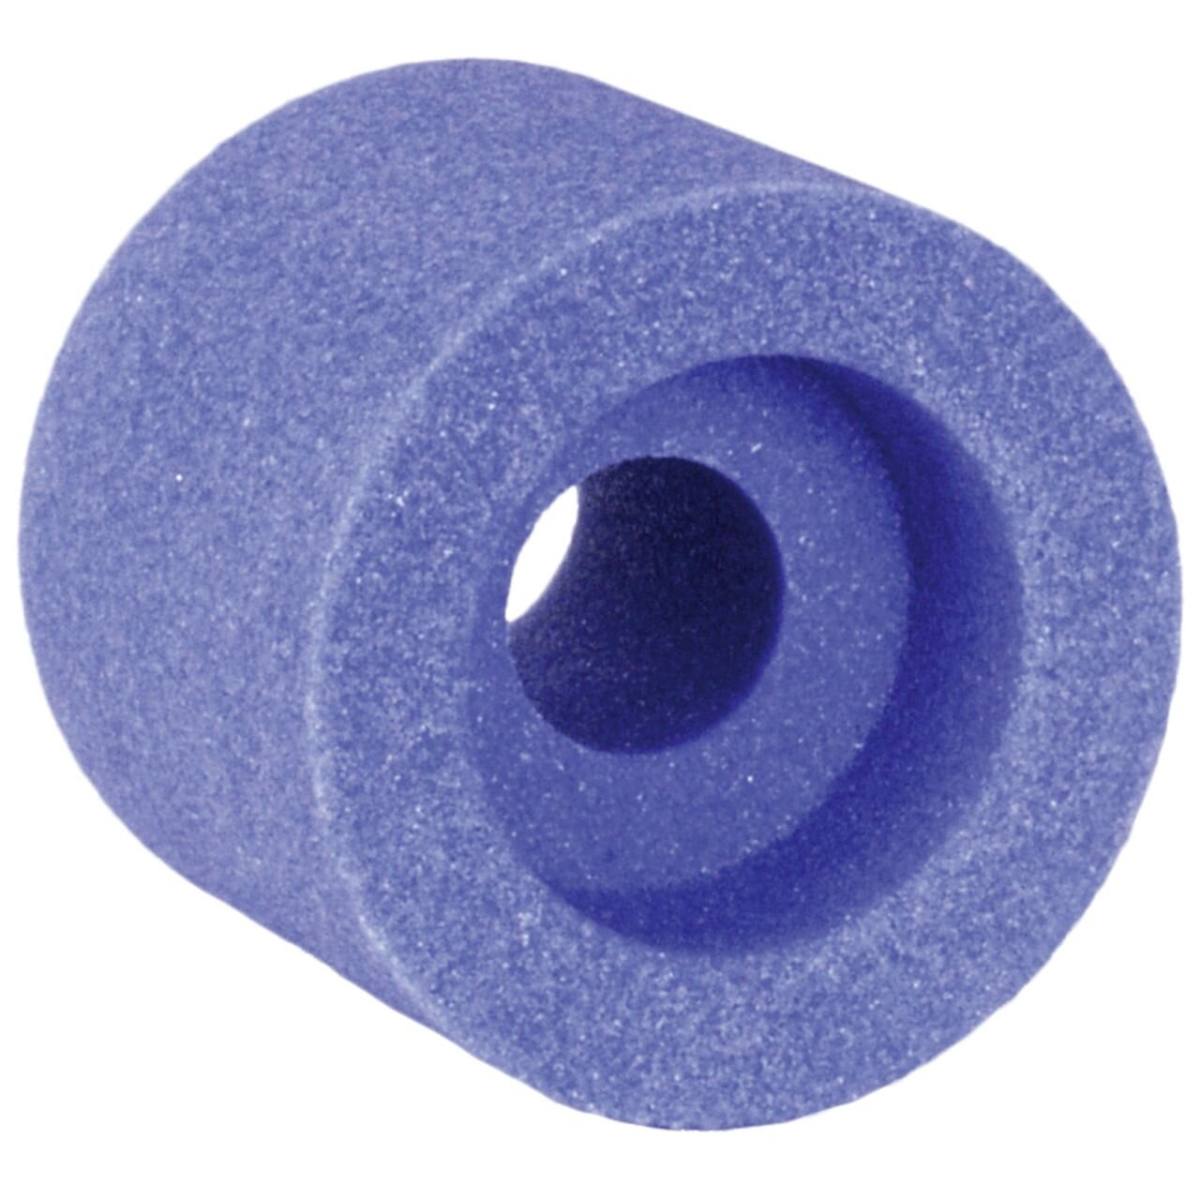 Tyrolit rettifica cilindrica interna in ceramica convenzionale DxDxH 25x25x6 Per acciai altamente legati e HSS, forma: 5, Art. 664759